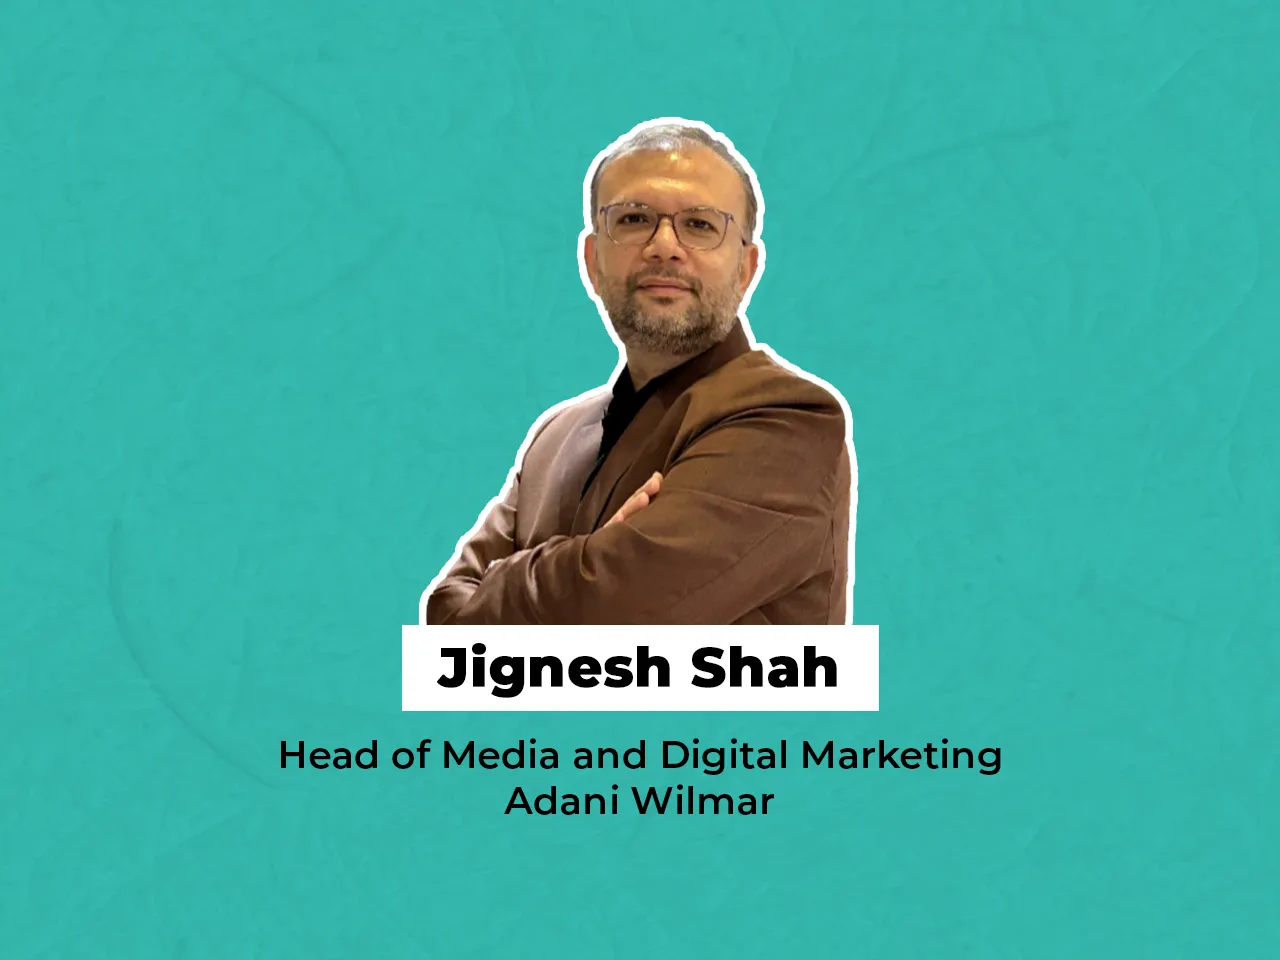 Jignesh Shah joins Adani Wilmar as Head of Media and Digital Marketing